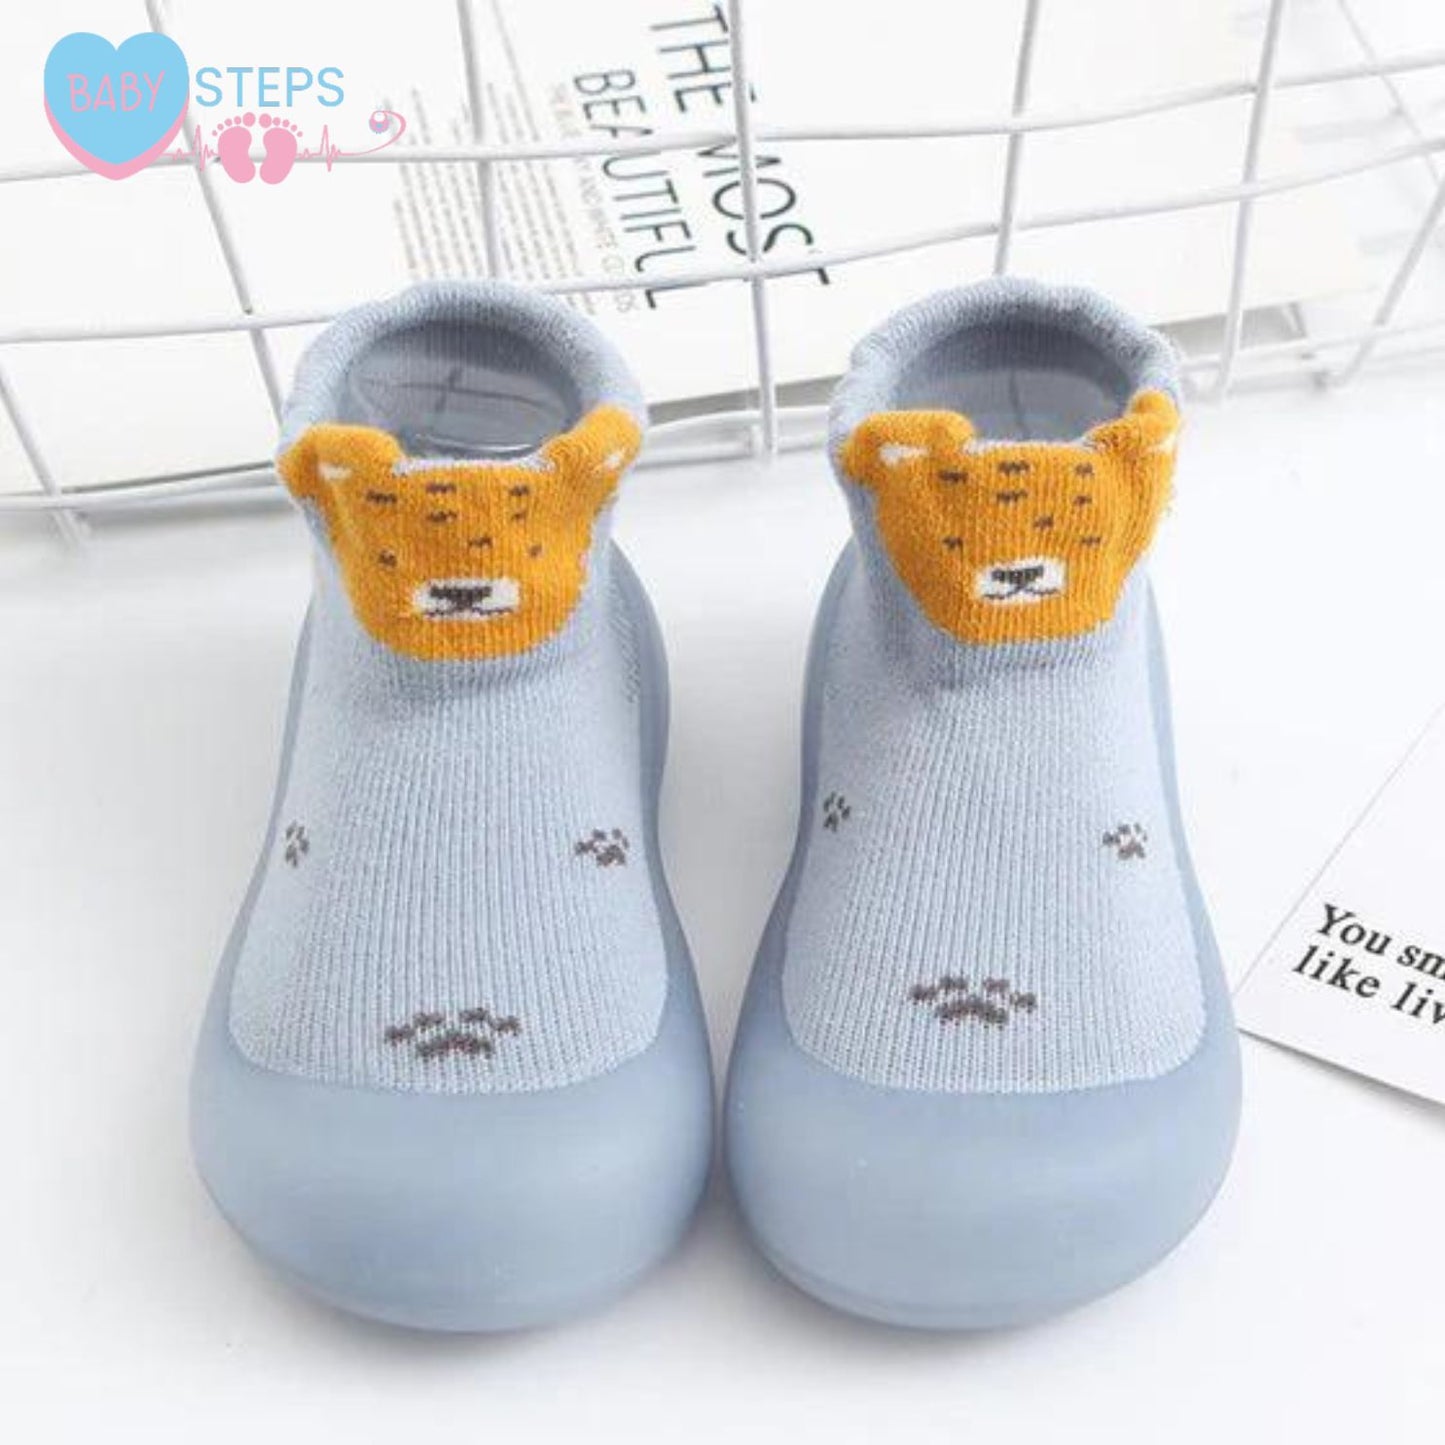 Baby Steps™ Shoe Socks